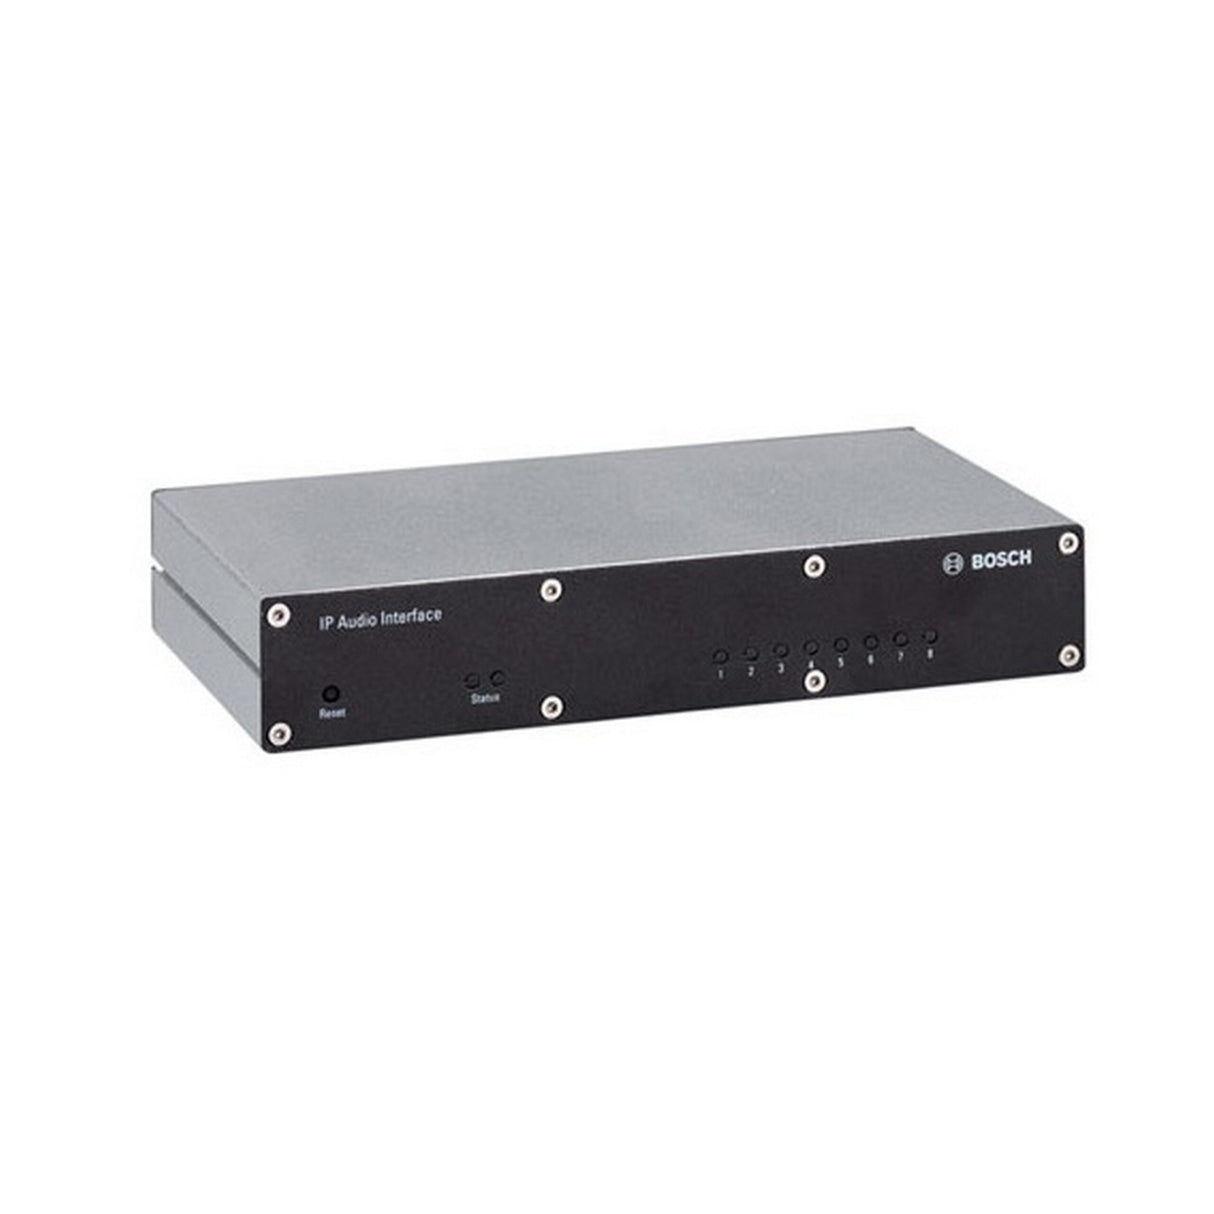 Bosch PRS-1AIP1 IP Audio Interface